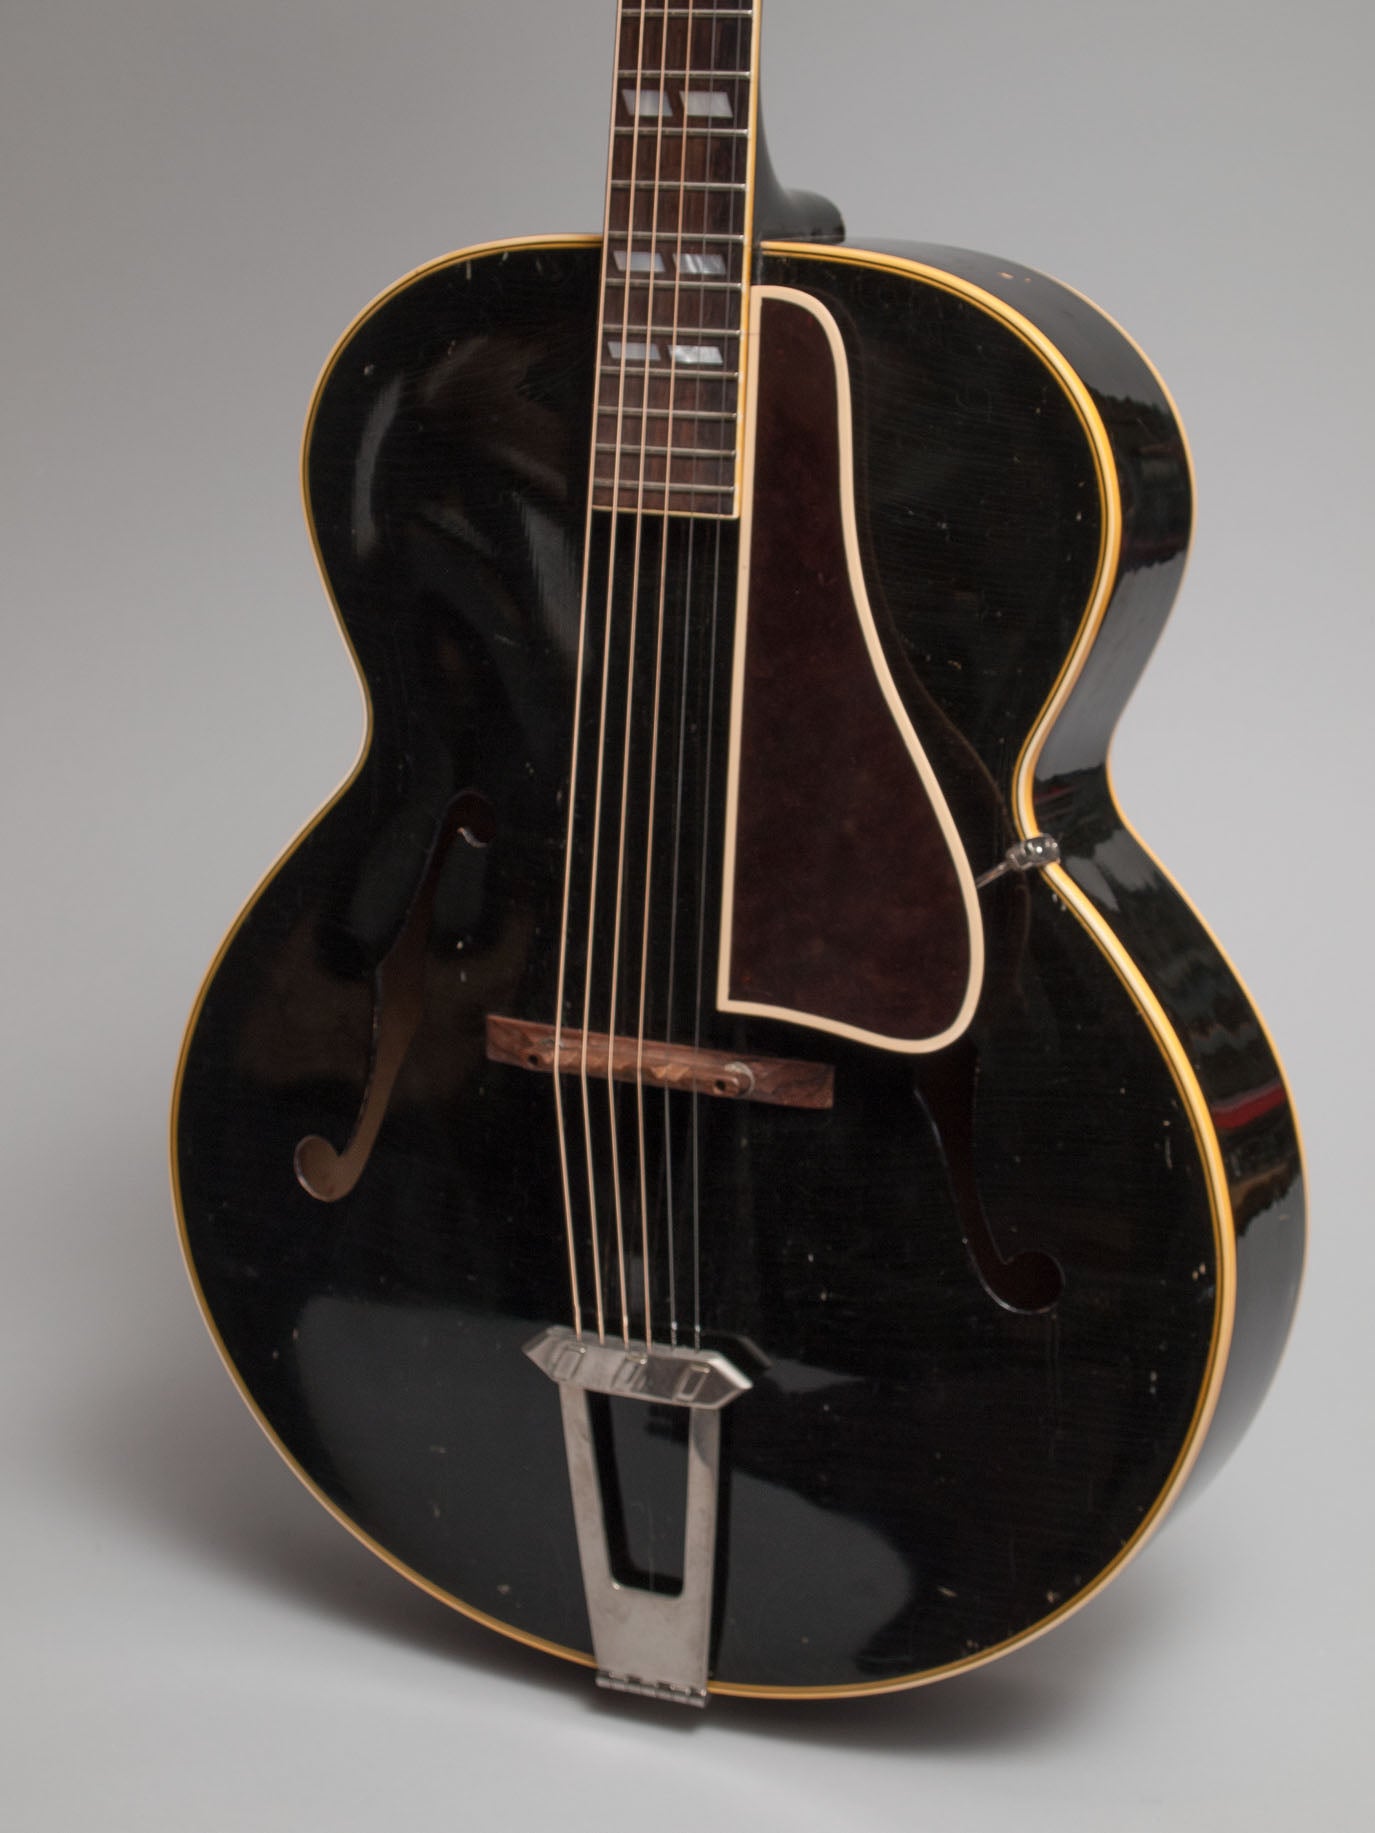 1949 Gibson L-7 Black